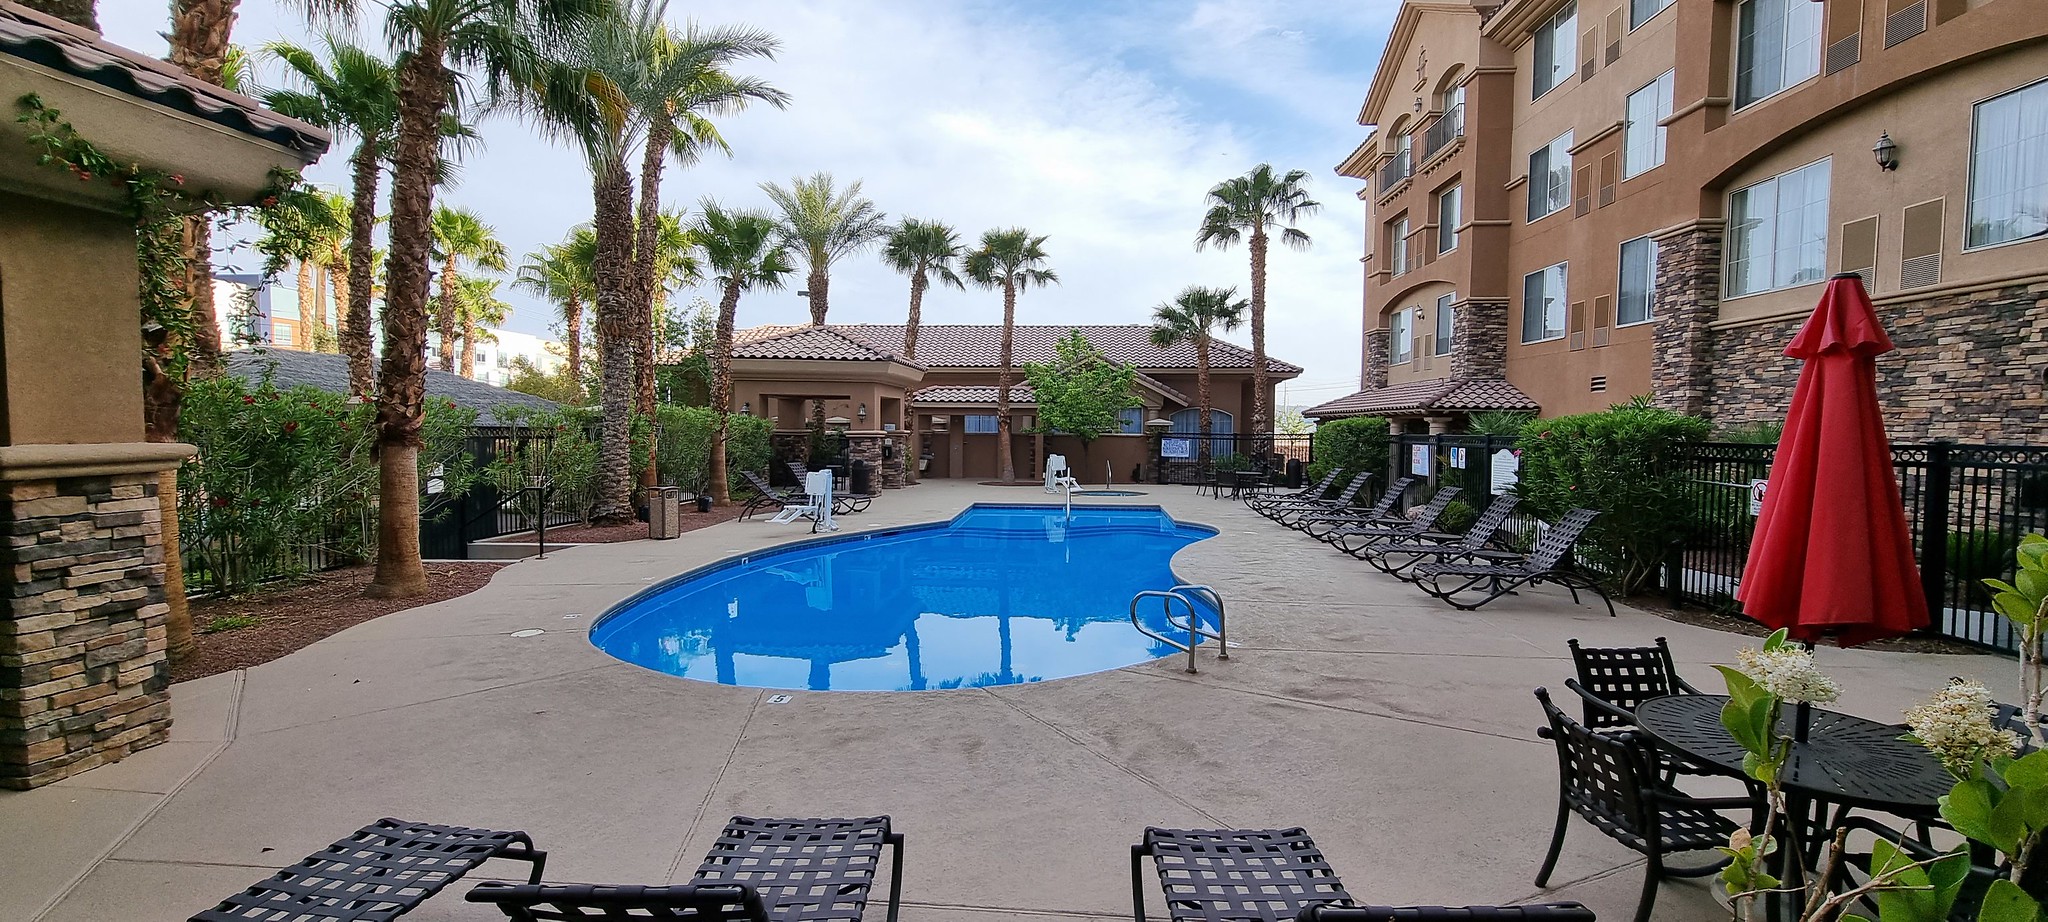 The pool at Hilton Garden Inn in Las Vegas